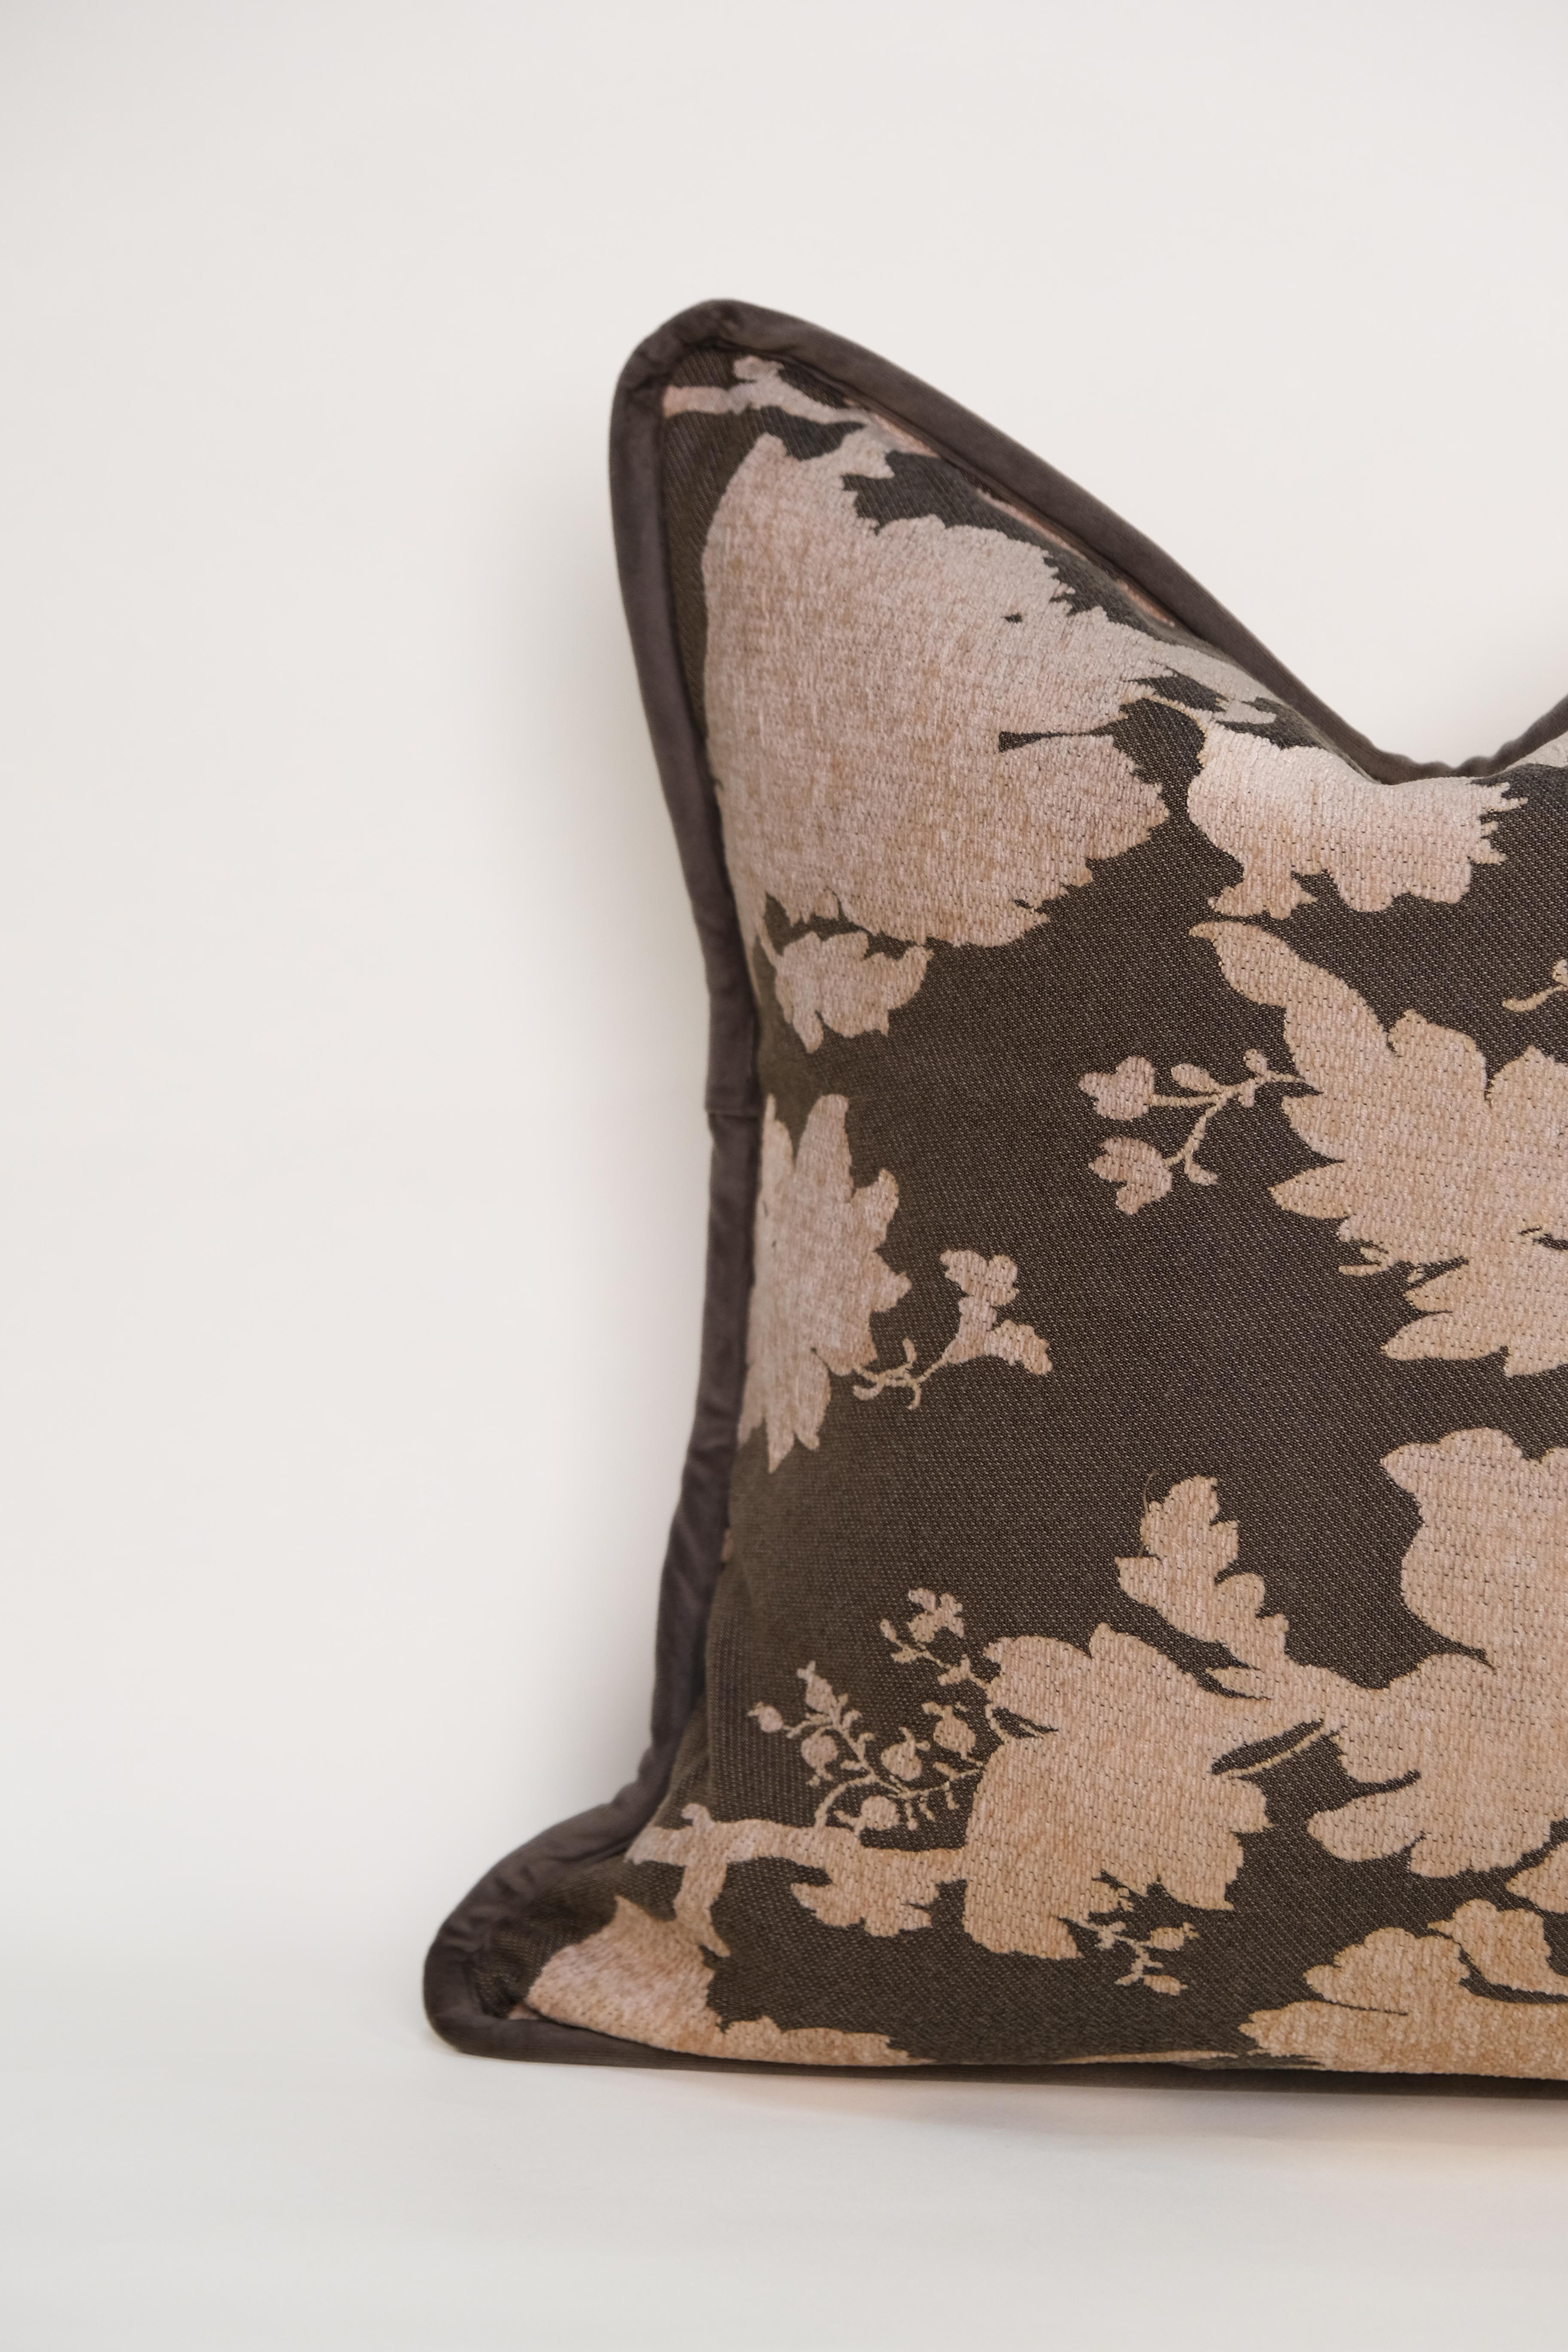 Benice Tapestry Pillow